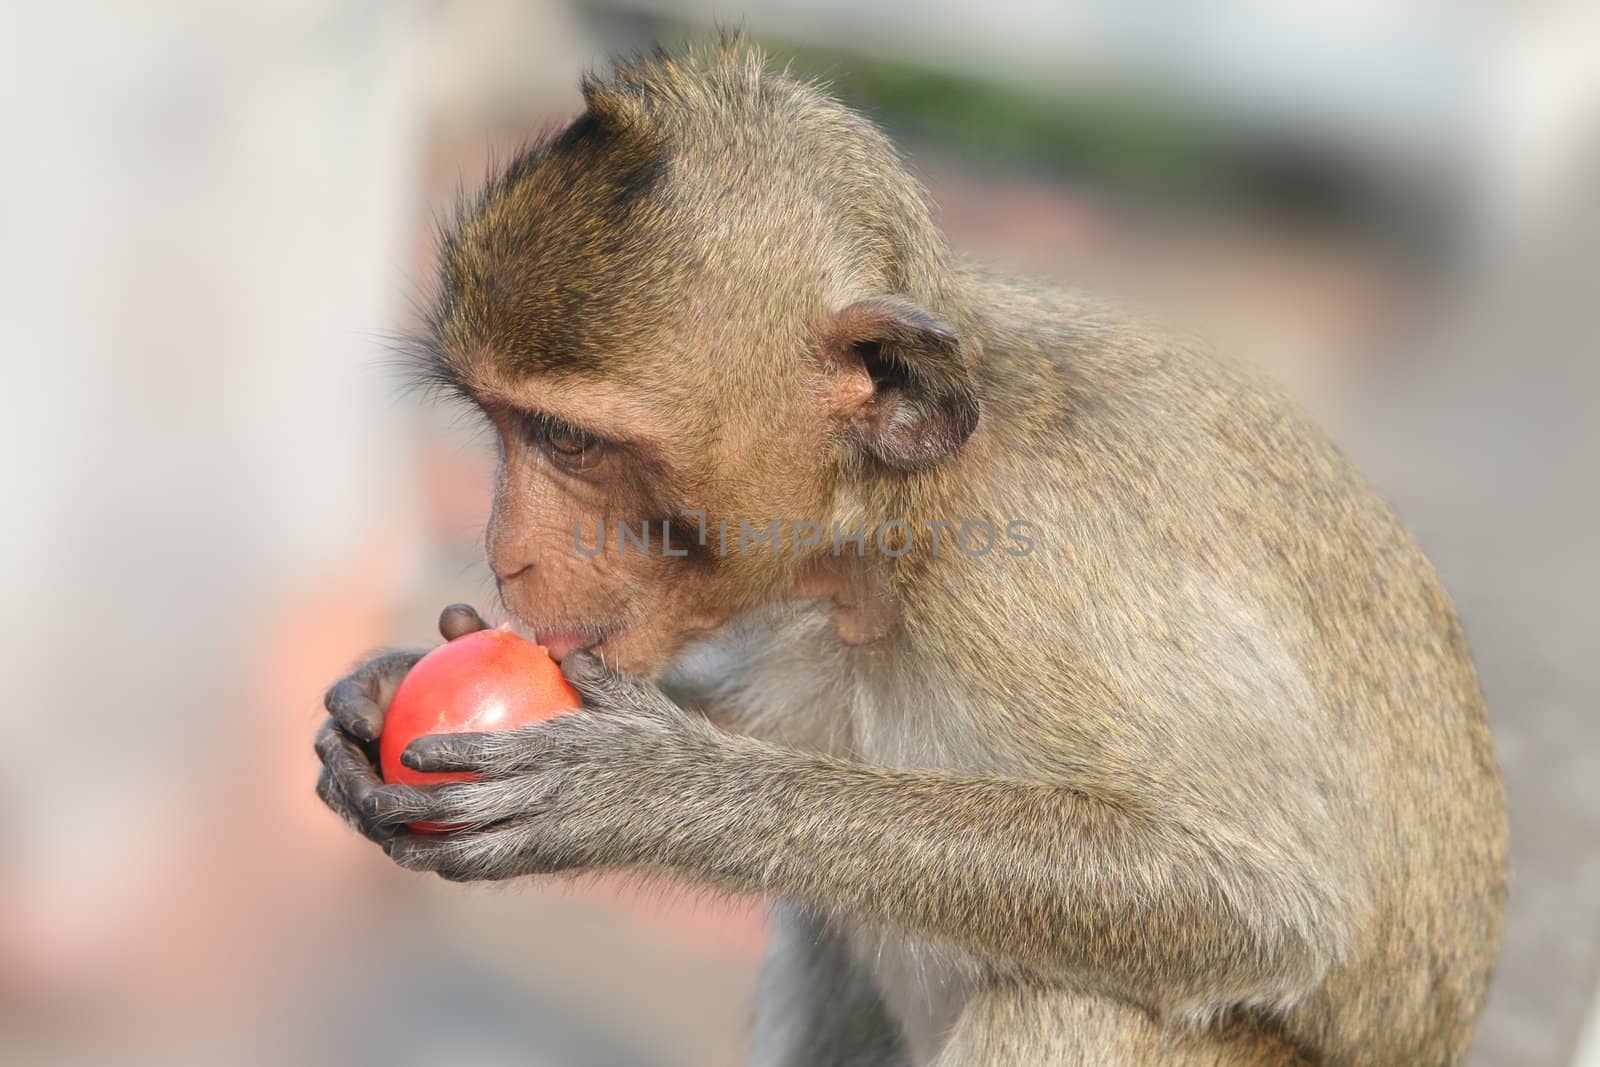 Little monkey eating tomato by vvvera